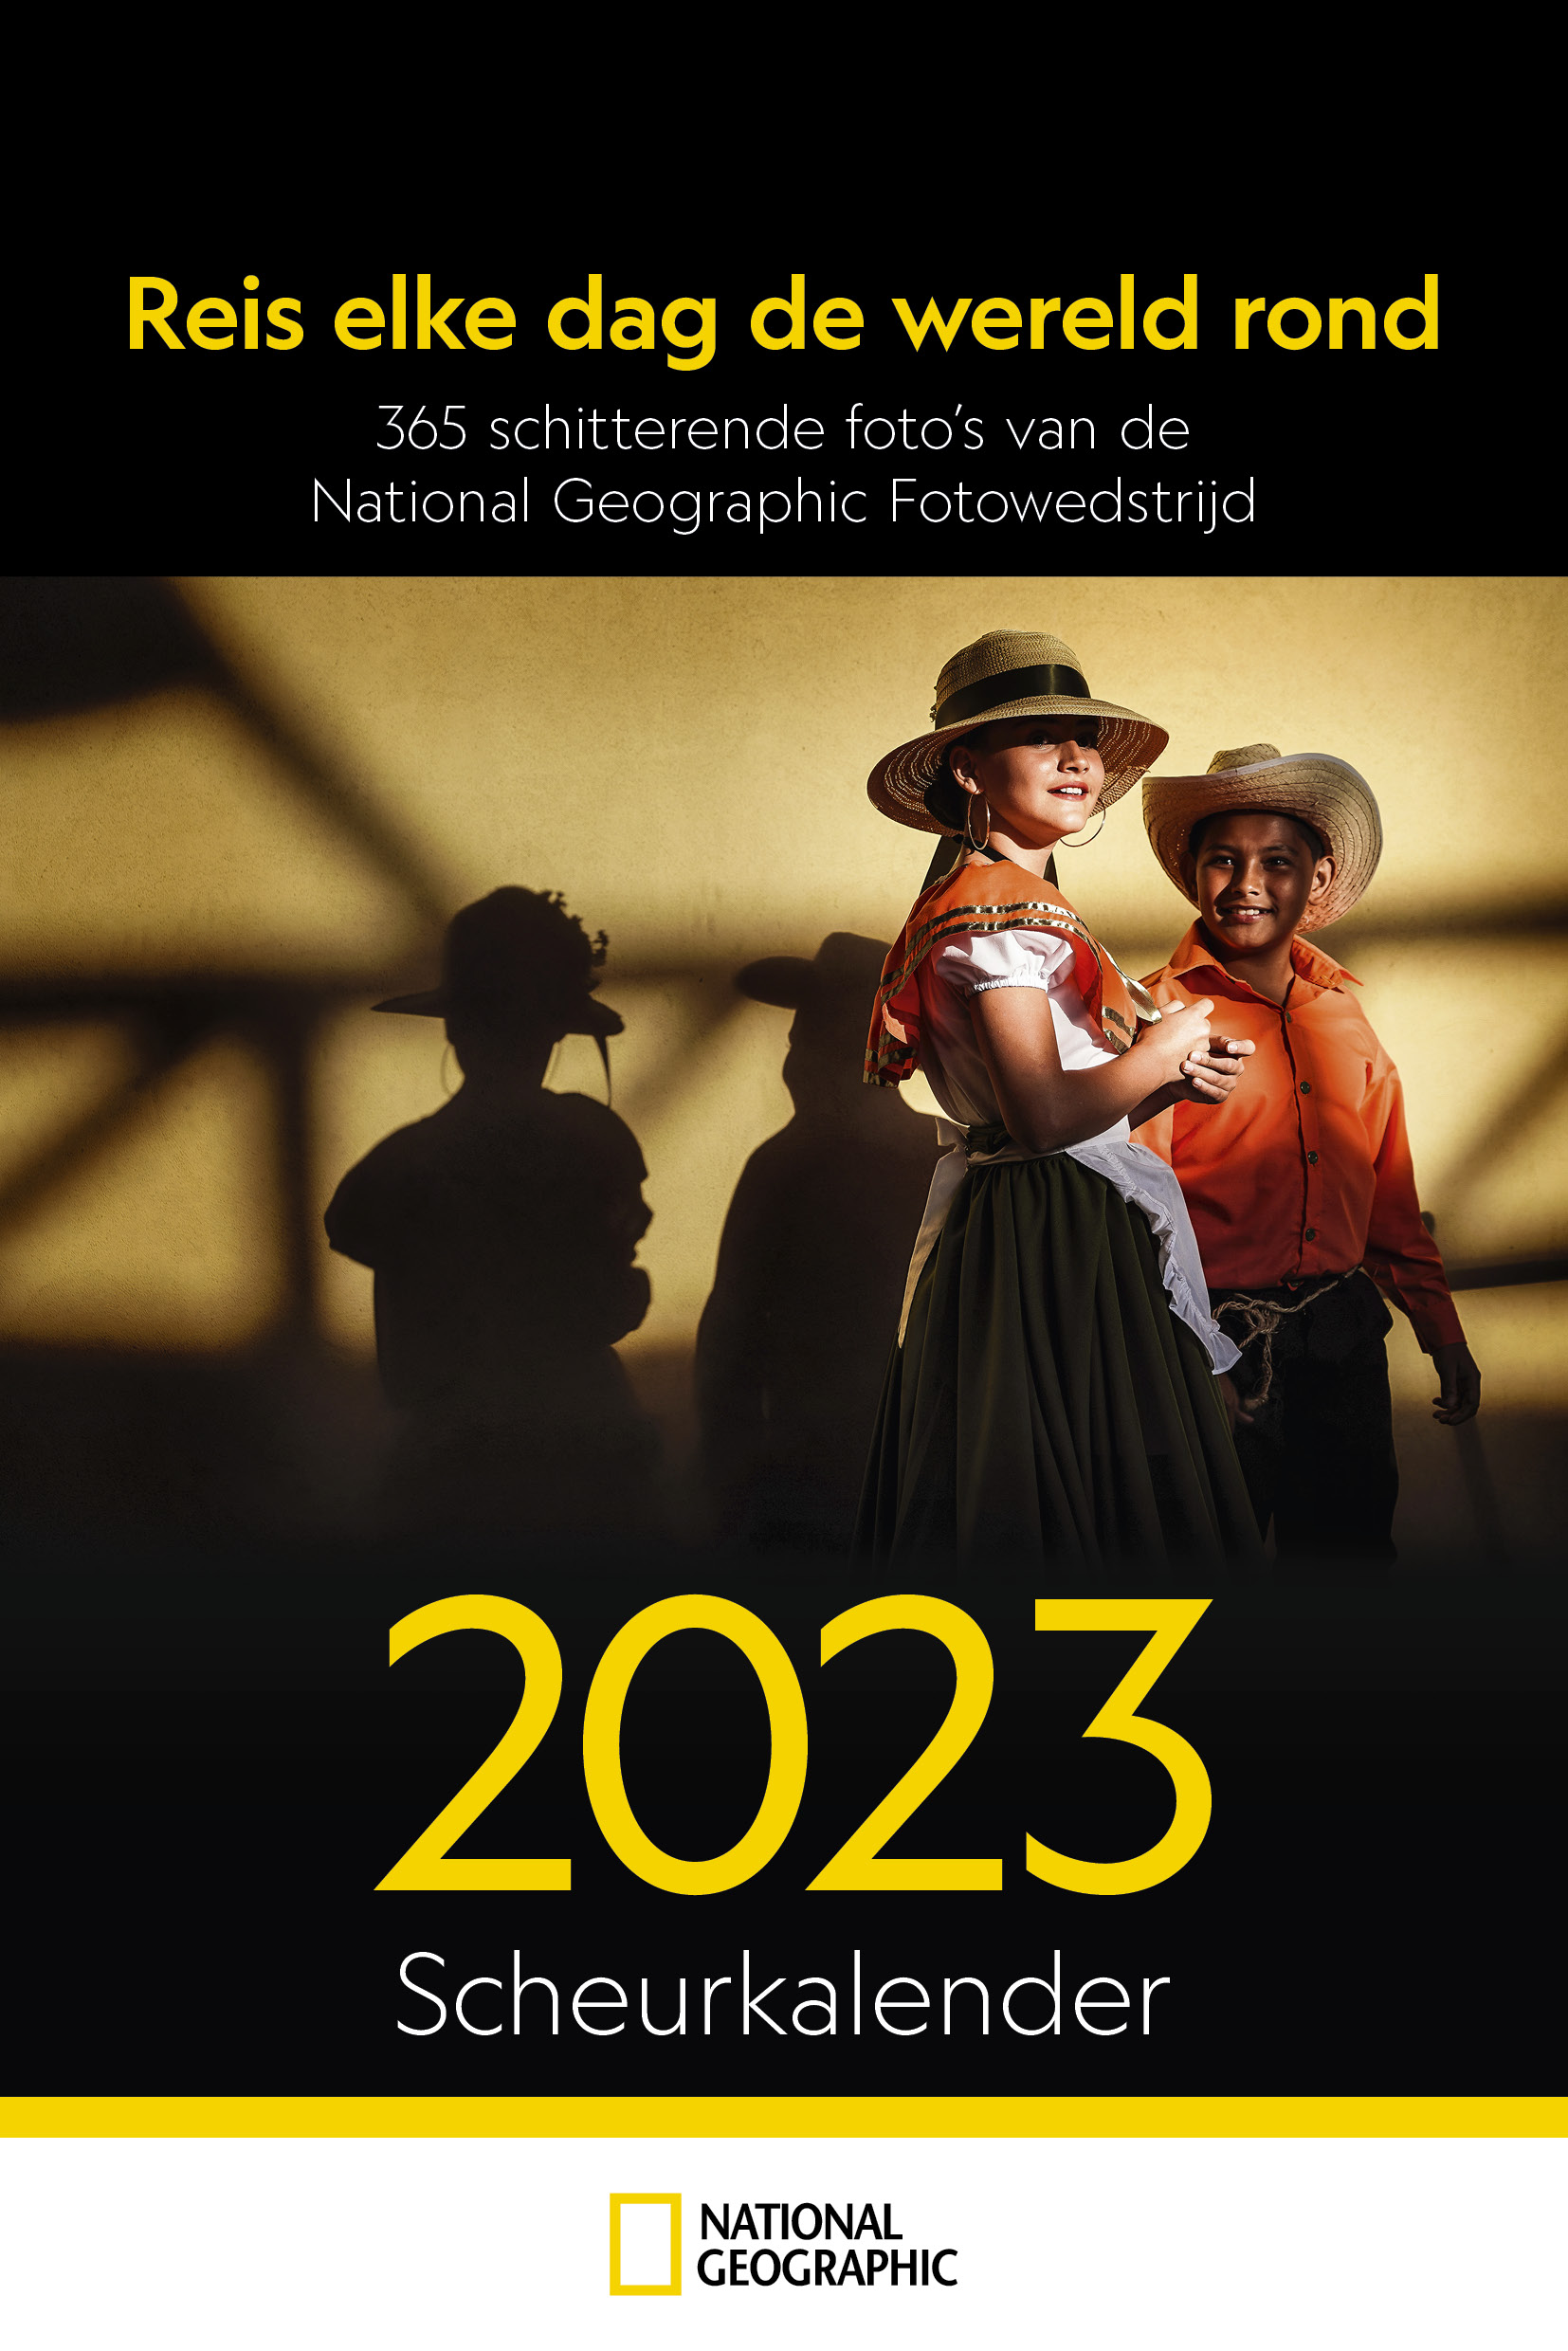 National Geographic Scheurkalender 2023